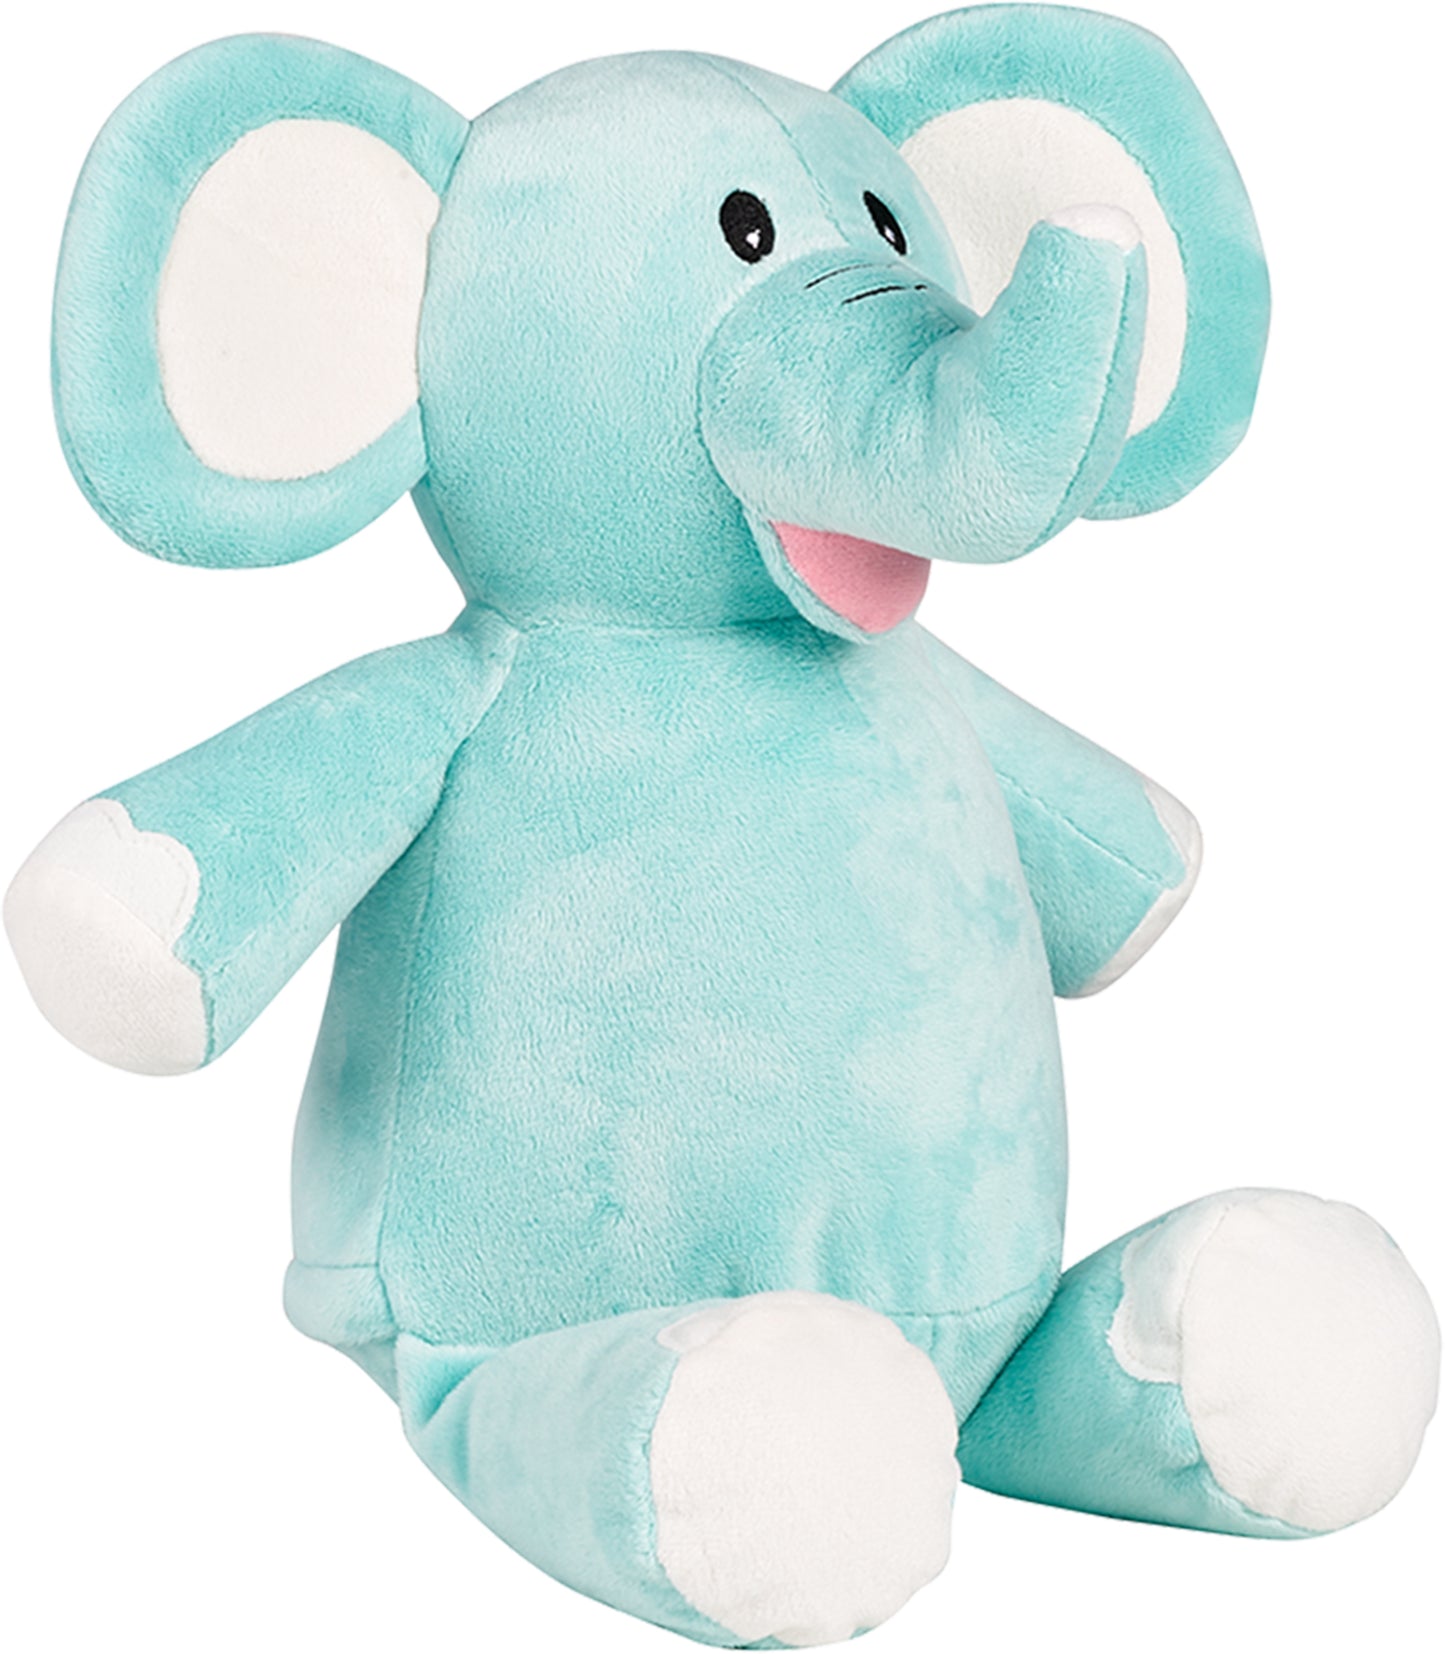 Personalized Stuffed Mint Elephant